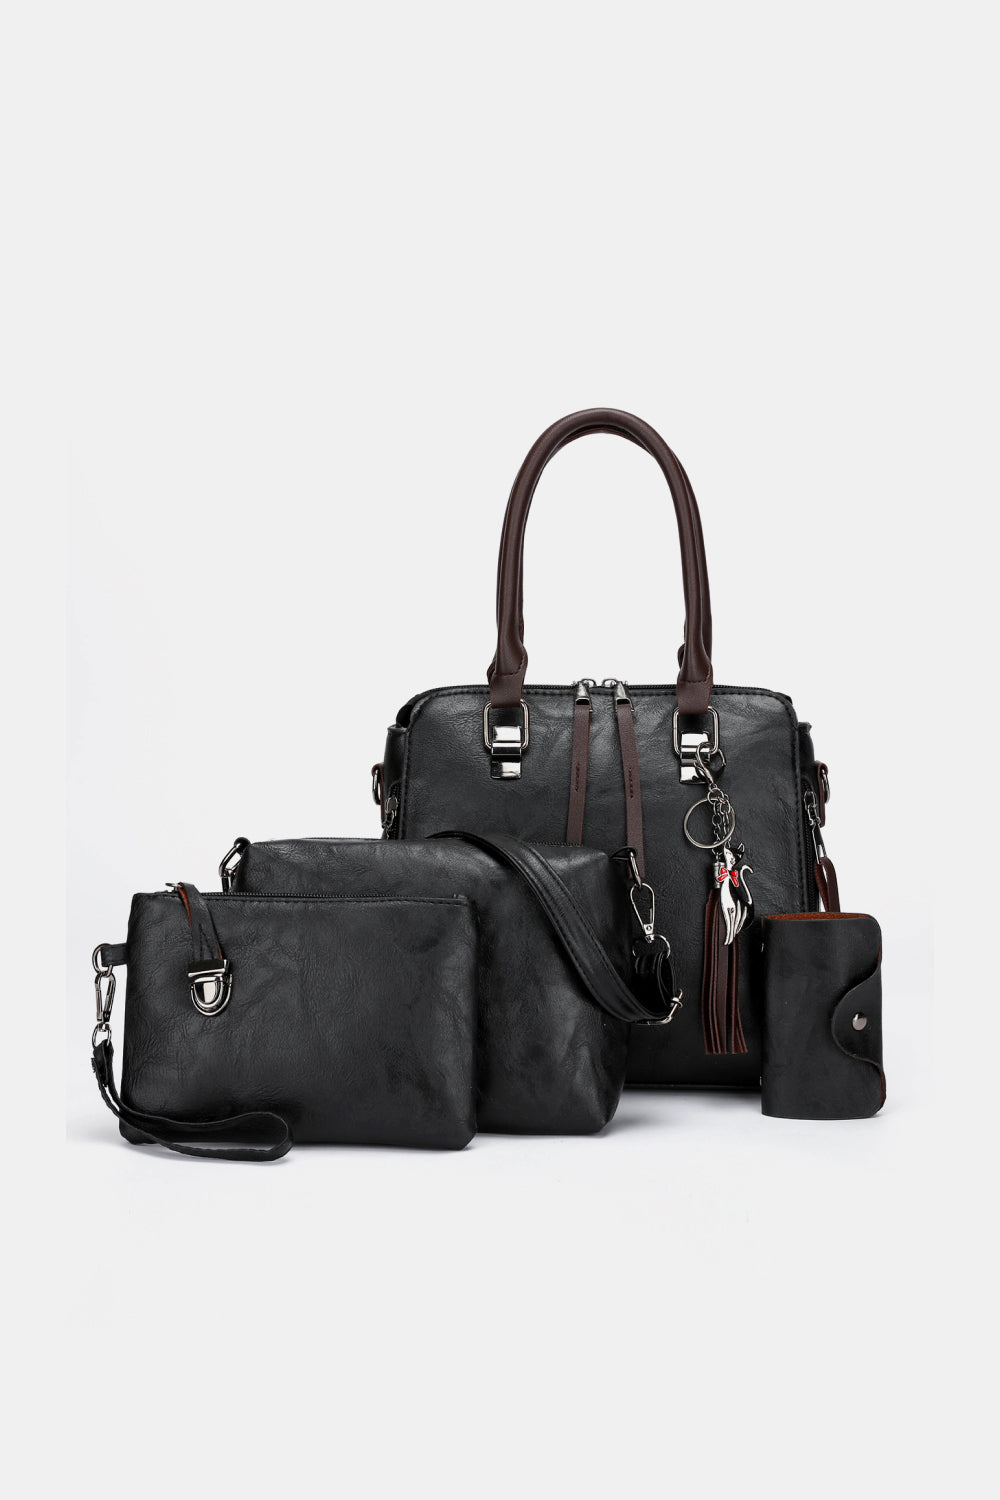 PREORDER- 4-Piece PU Leather Bag Set